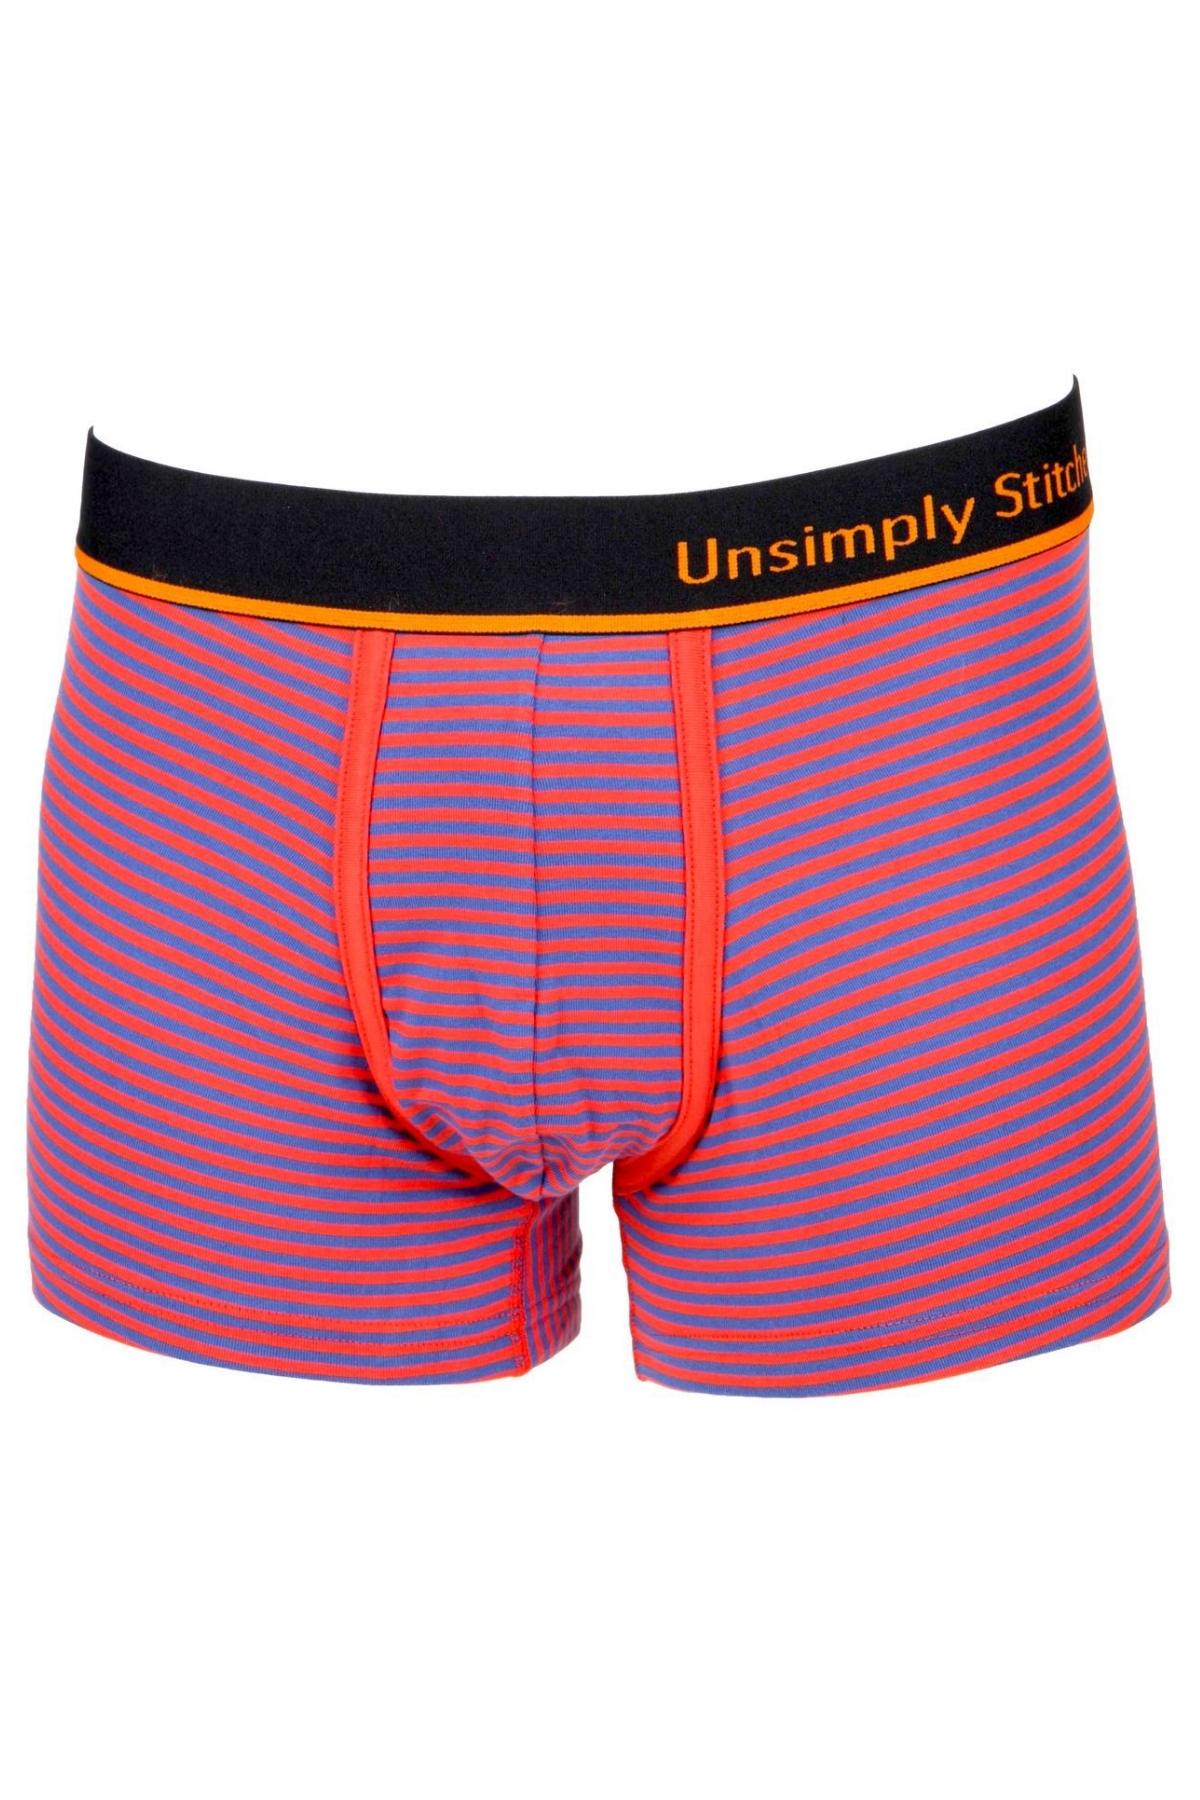 Unsimply Stitched Orange/Blue Sailor-Stripe Trunk